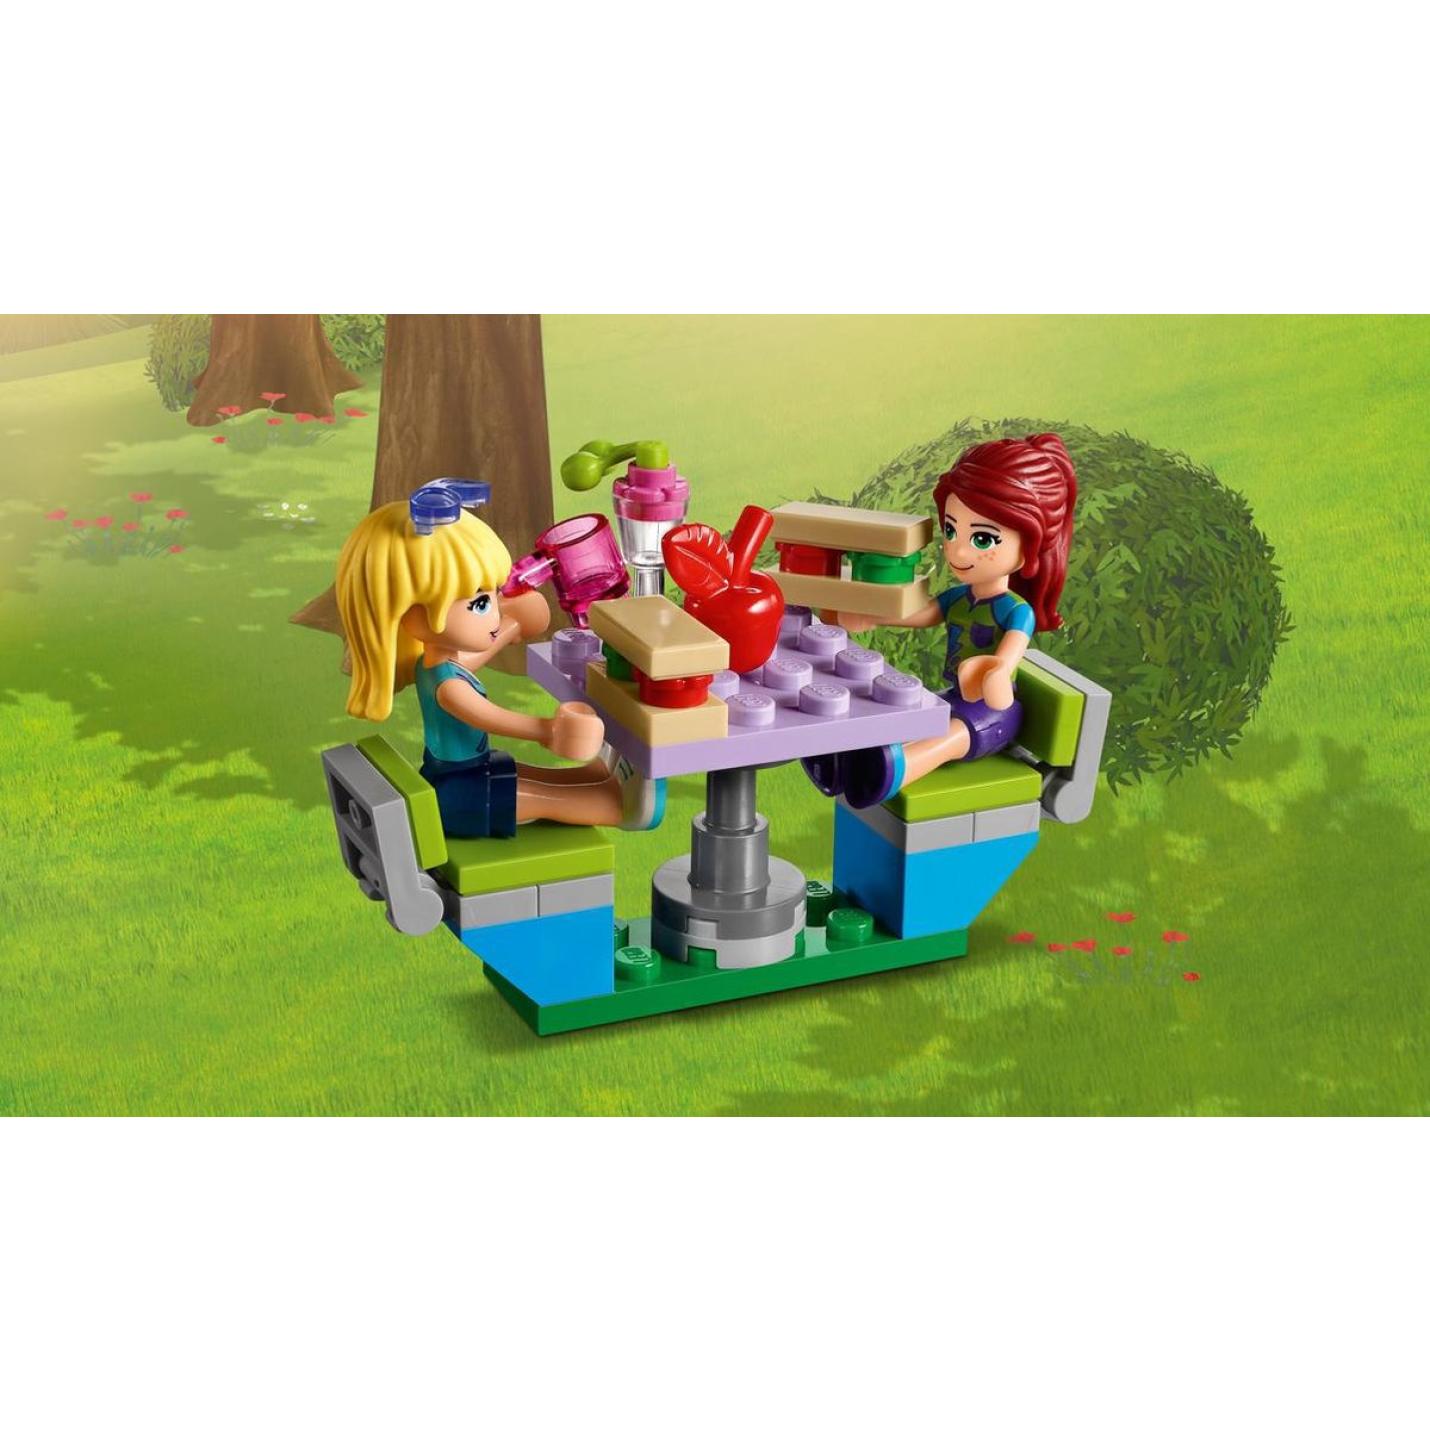 LEGO Friends Mia's Camper - 41339 16